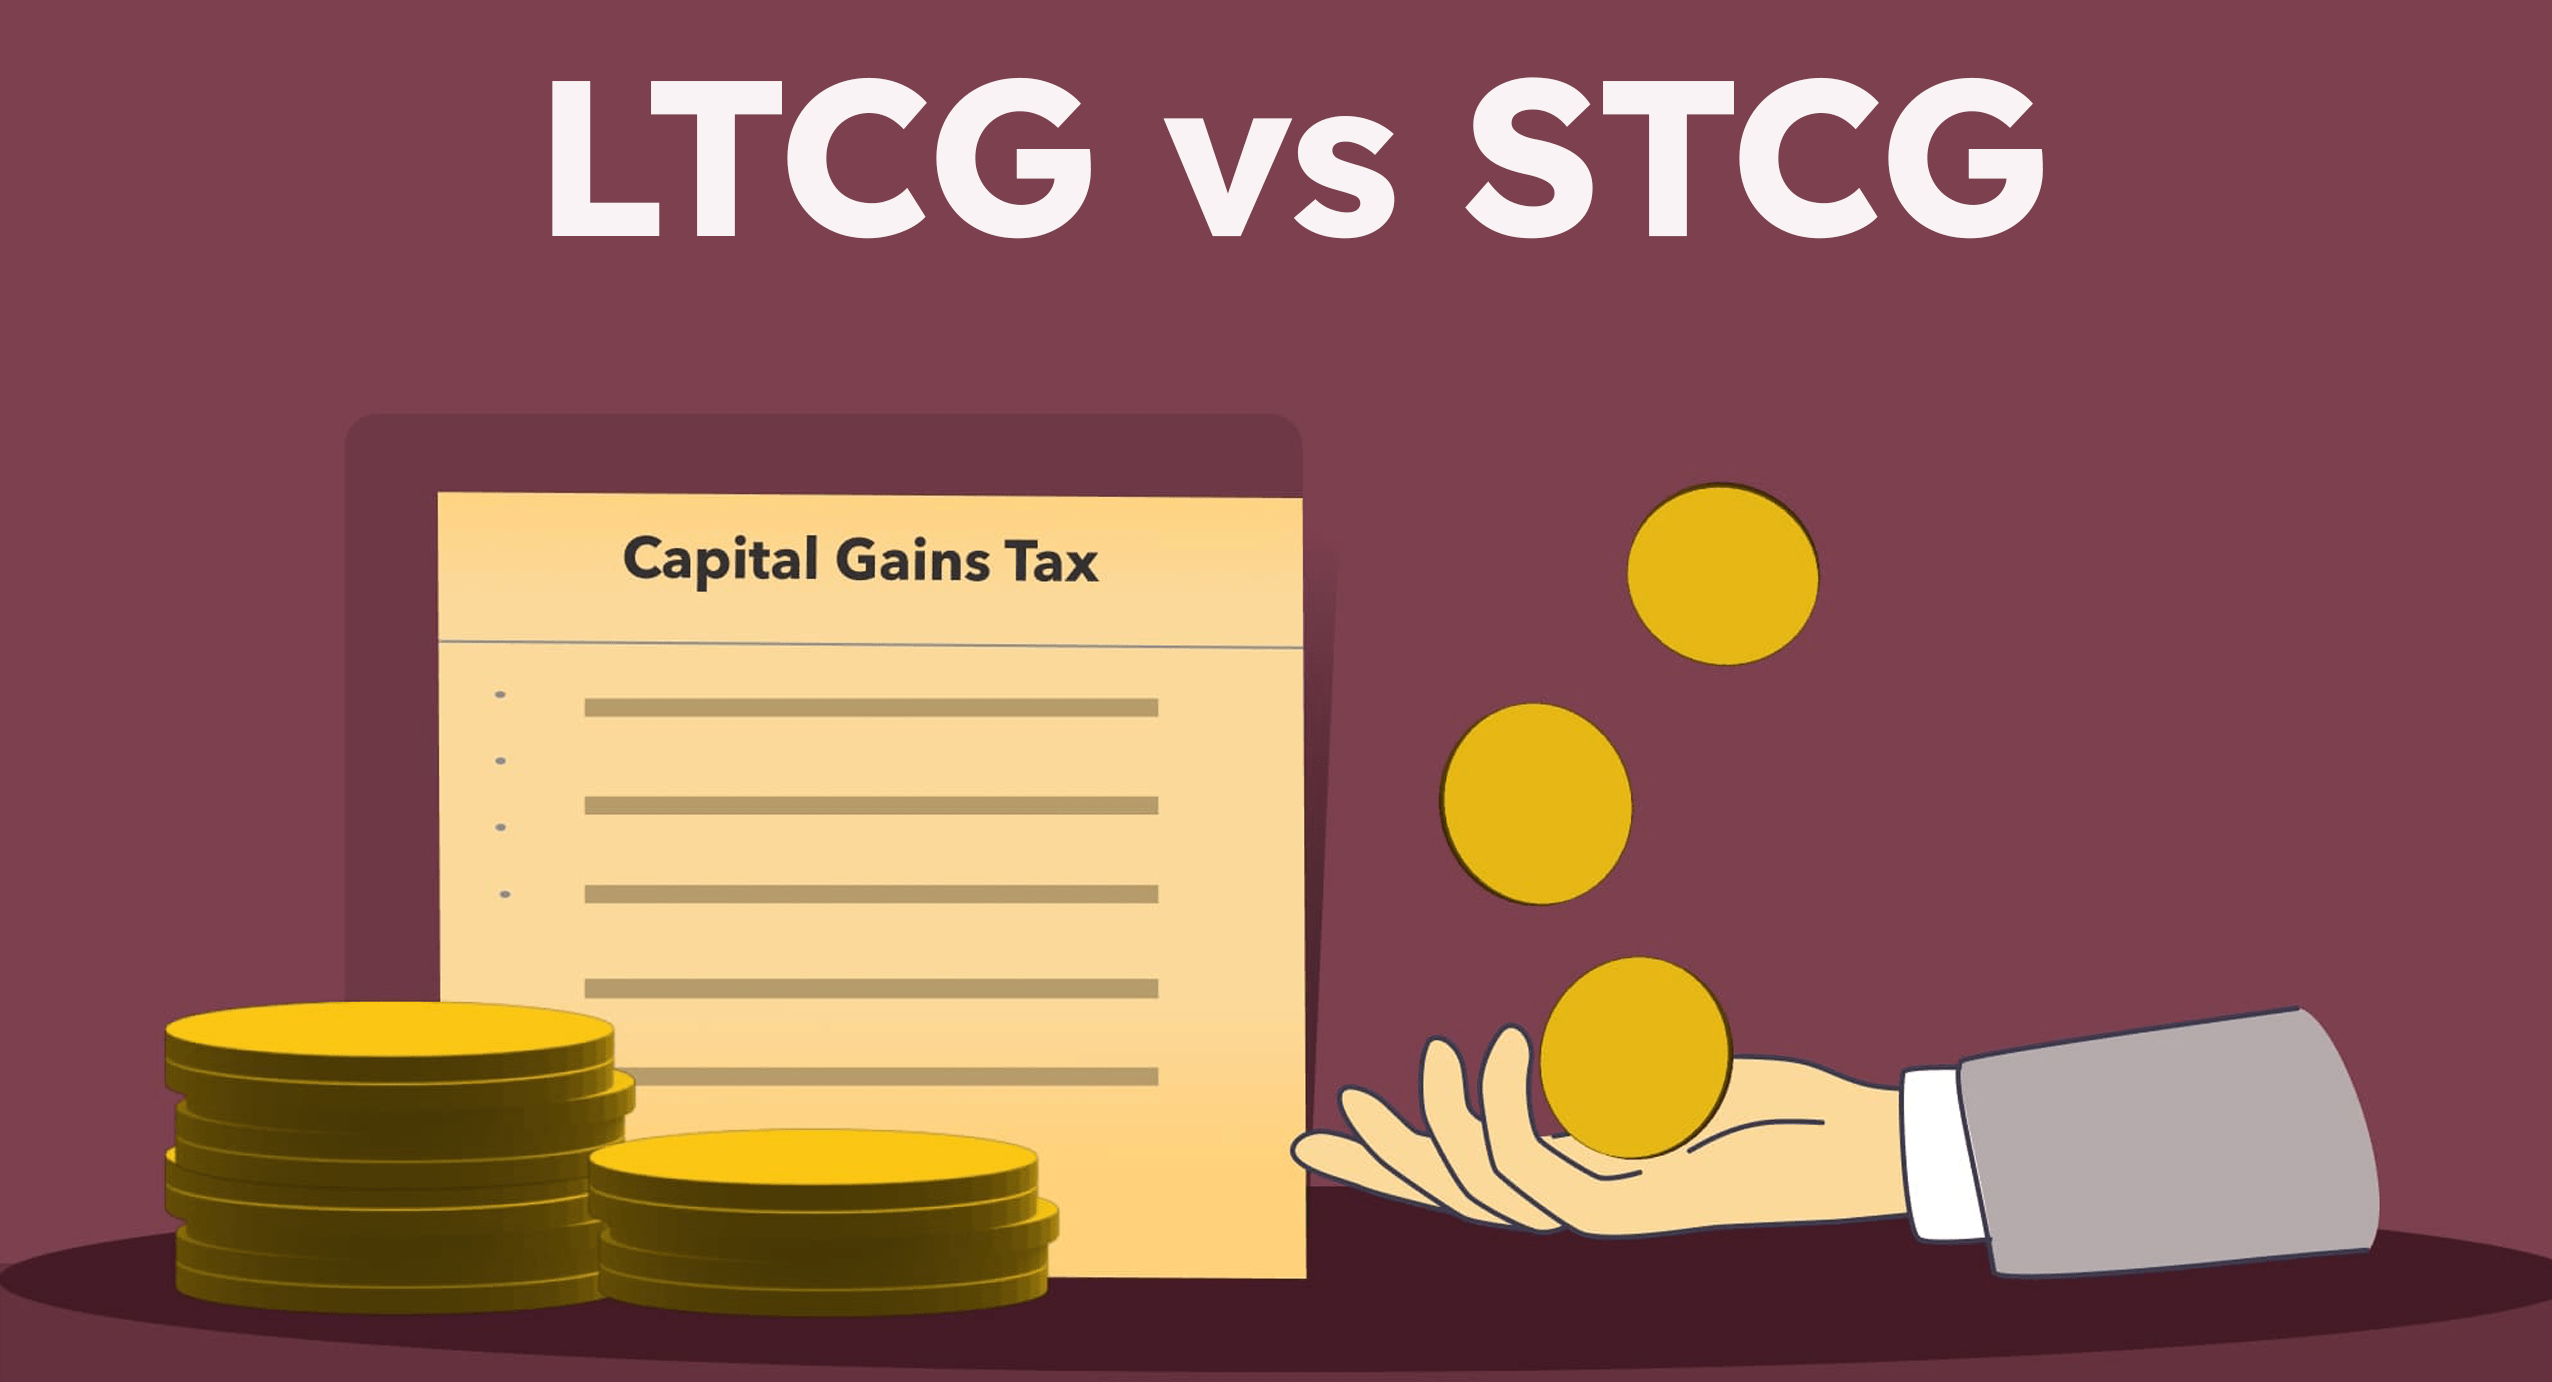 LTCG vs STCG